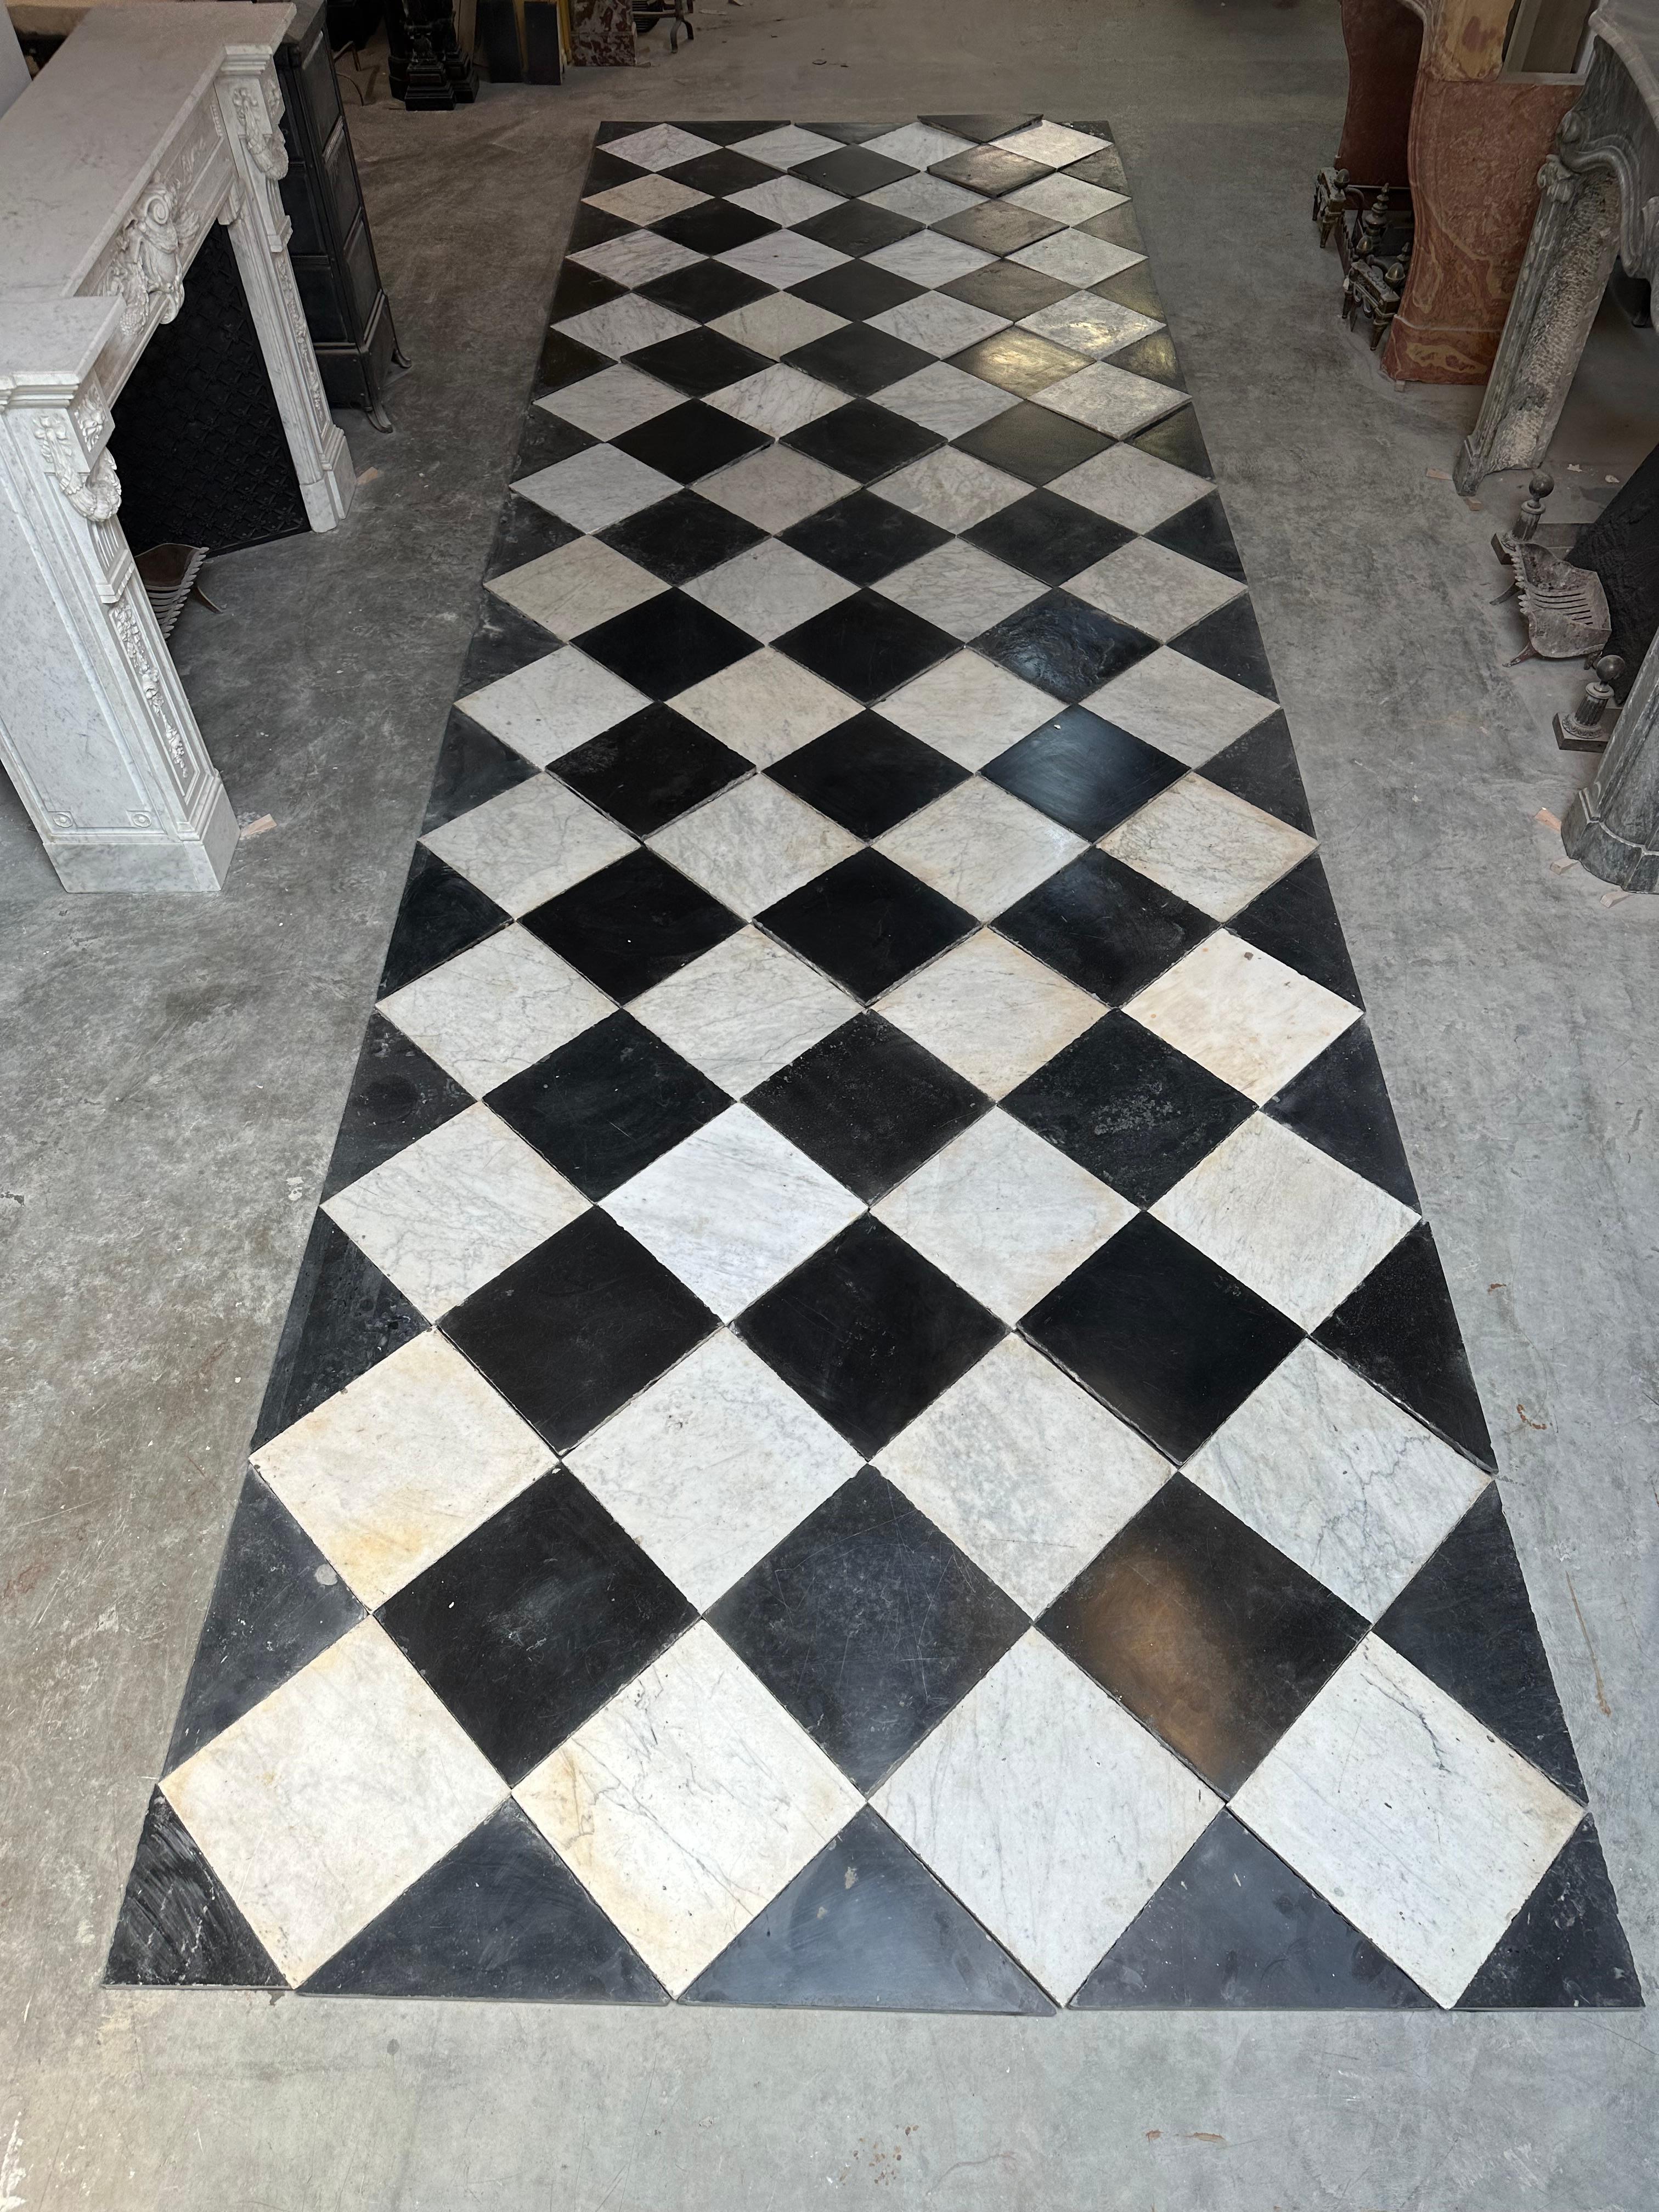 Antique Checkered Black an White Marble Tiles 5